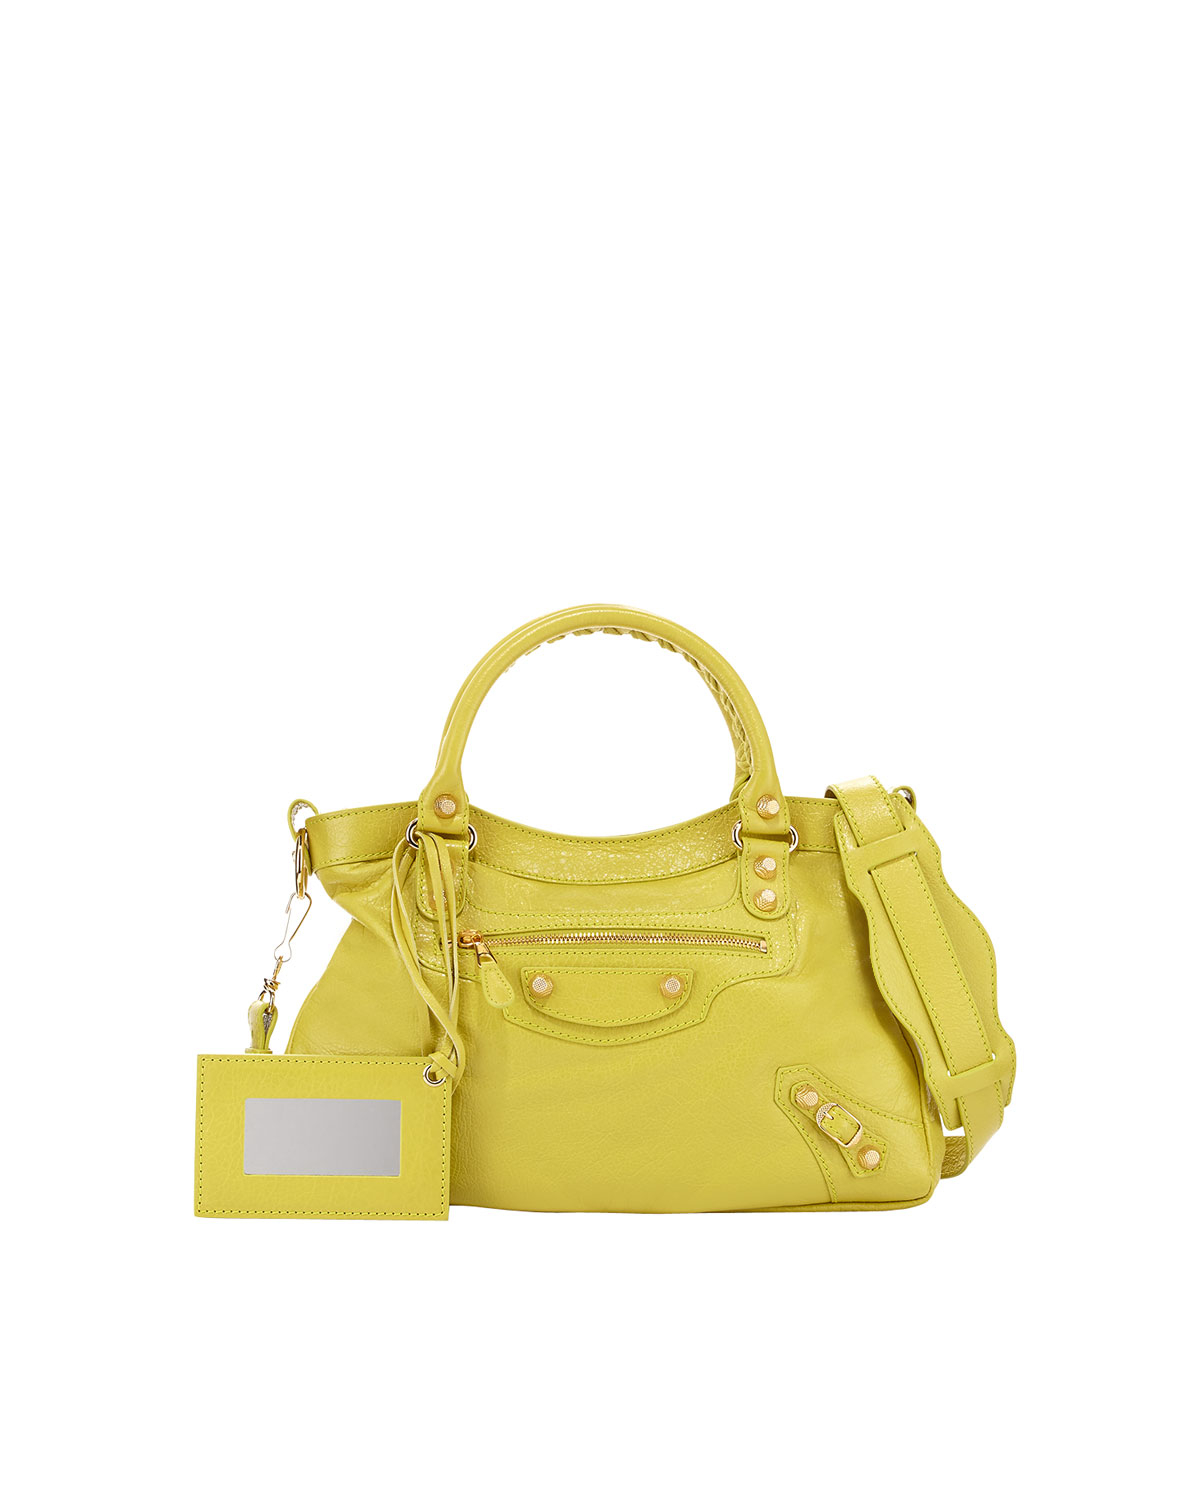 Balenciaga Giant 12 Golden Town Bag in Yellow | Lyst